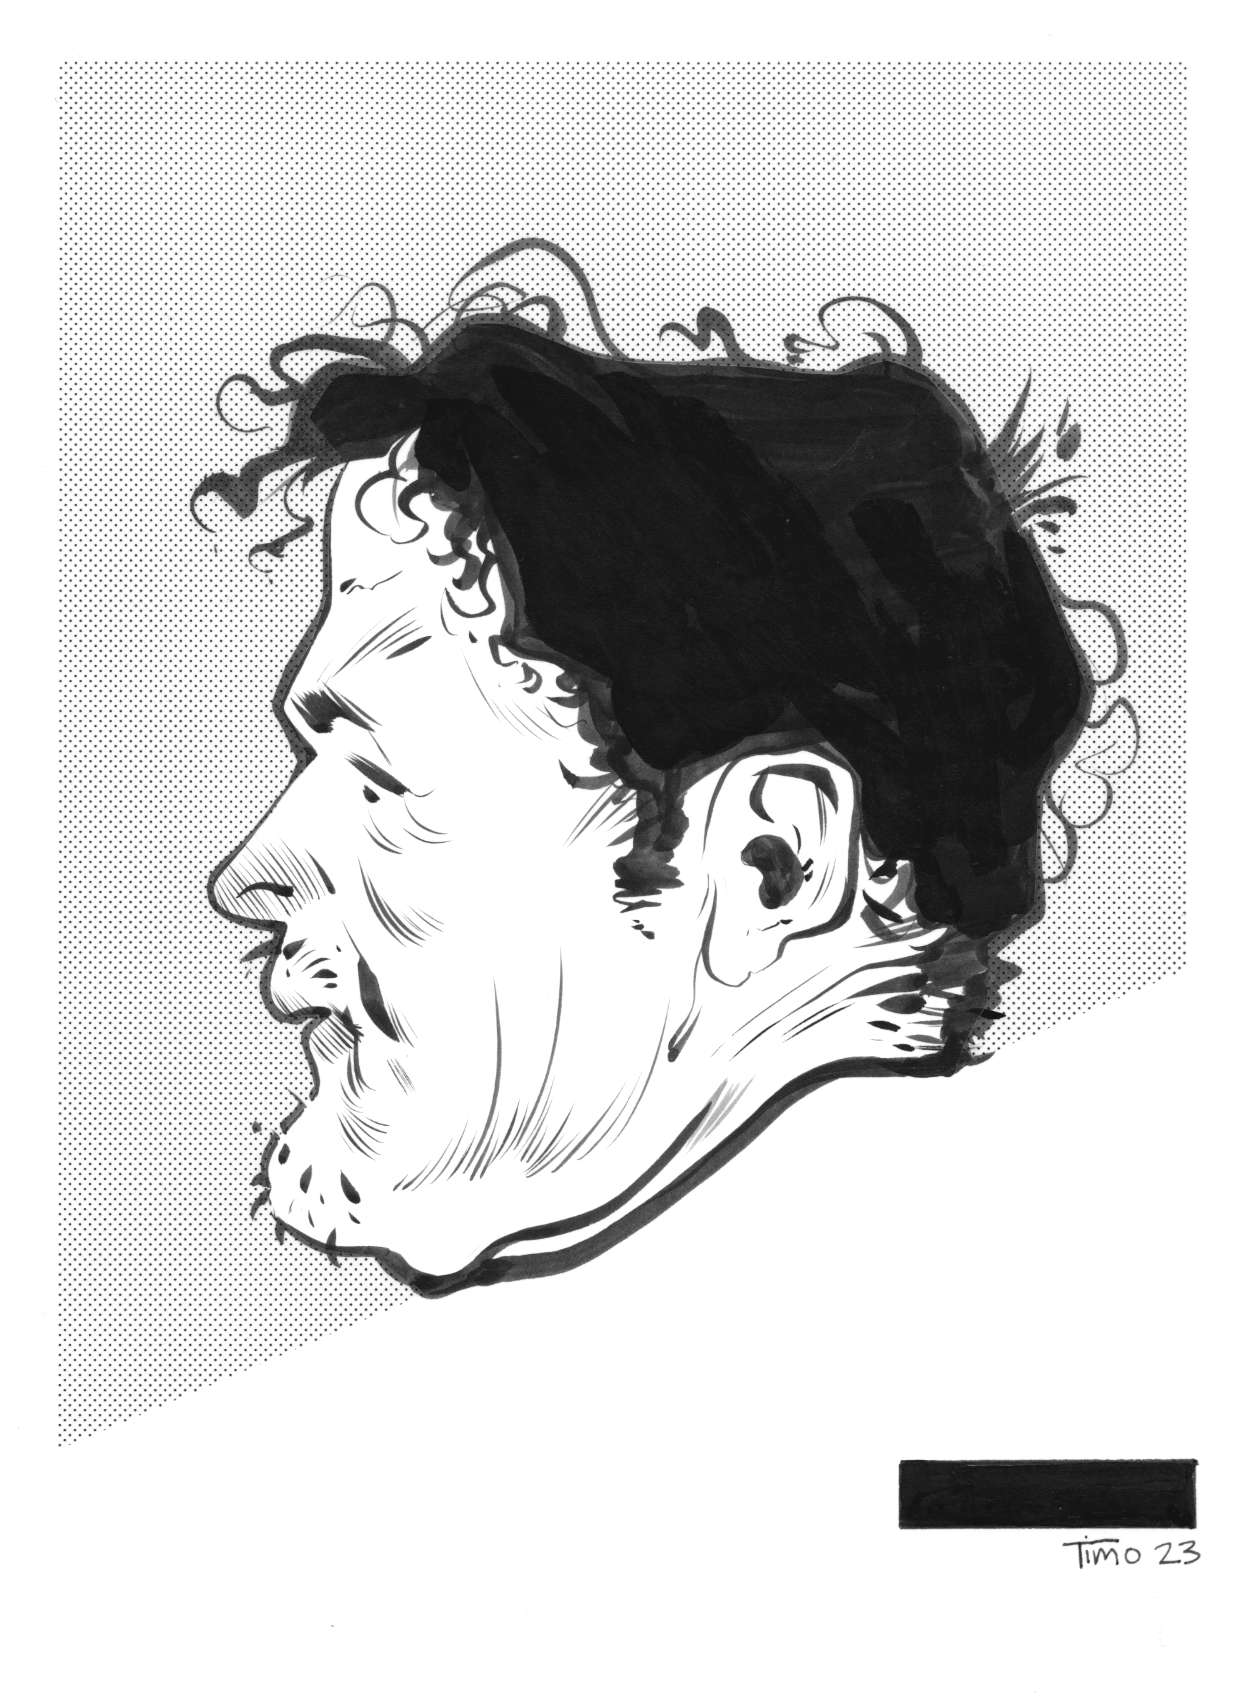 floating head illustration inked with pentel brush pen screentone